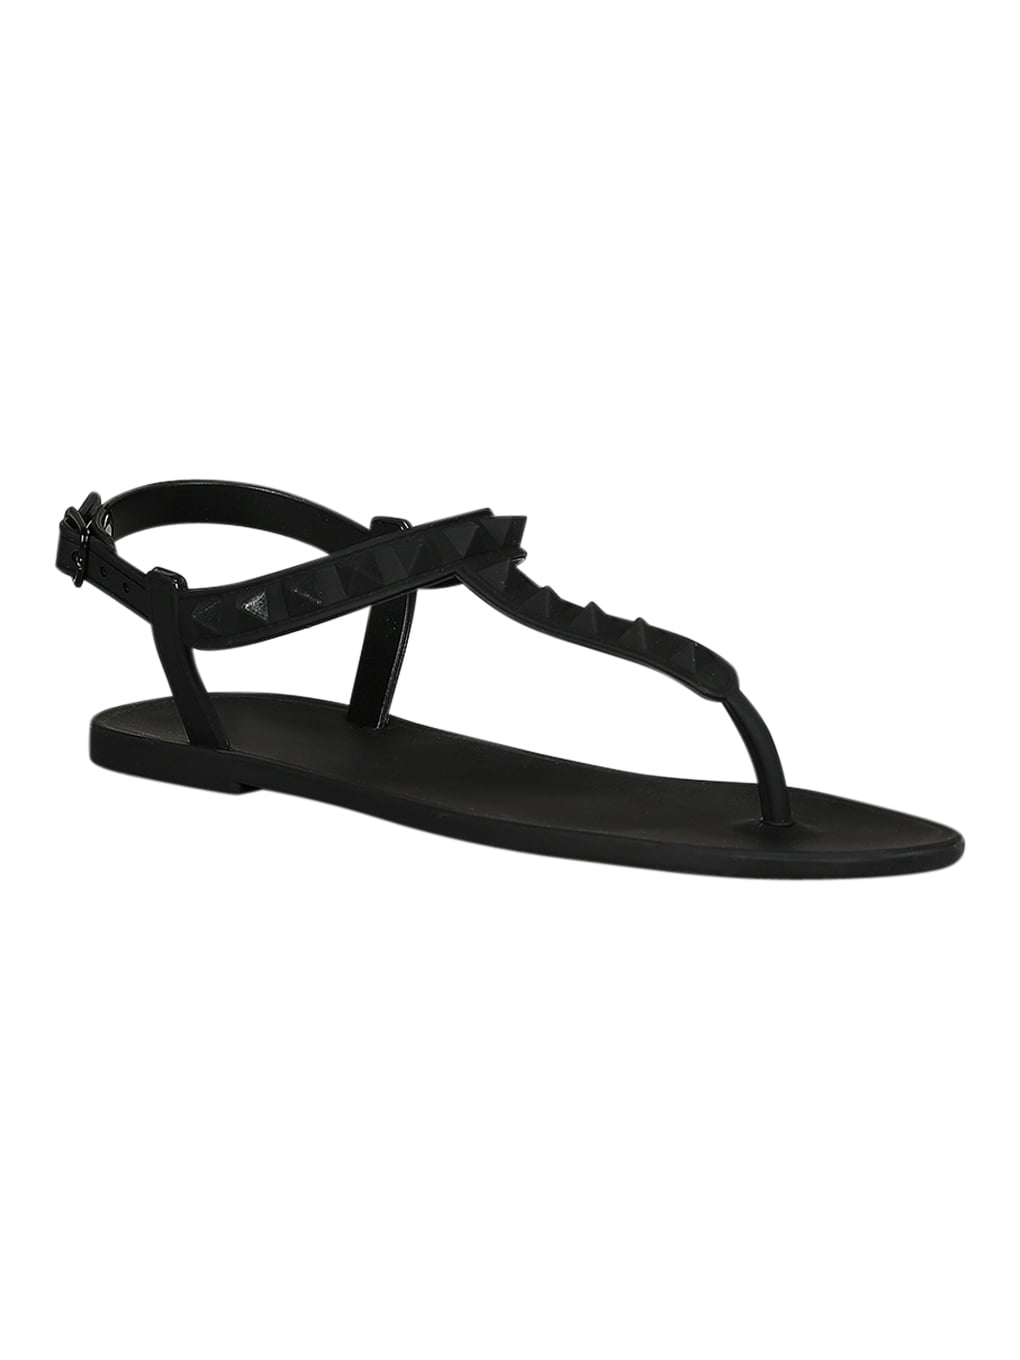 black studded jelly sandals